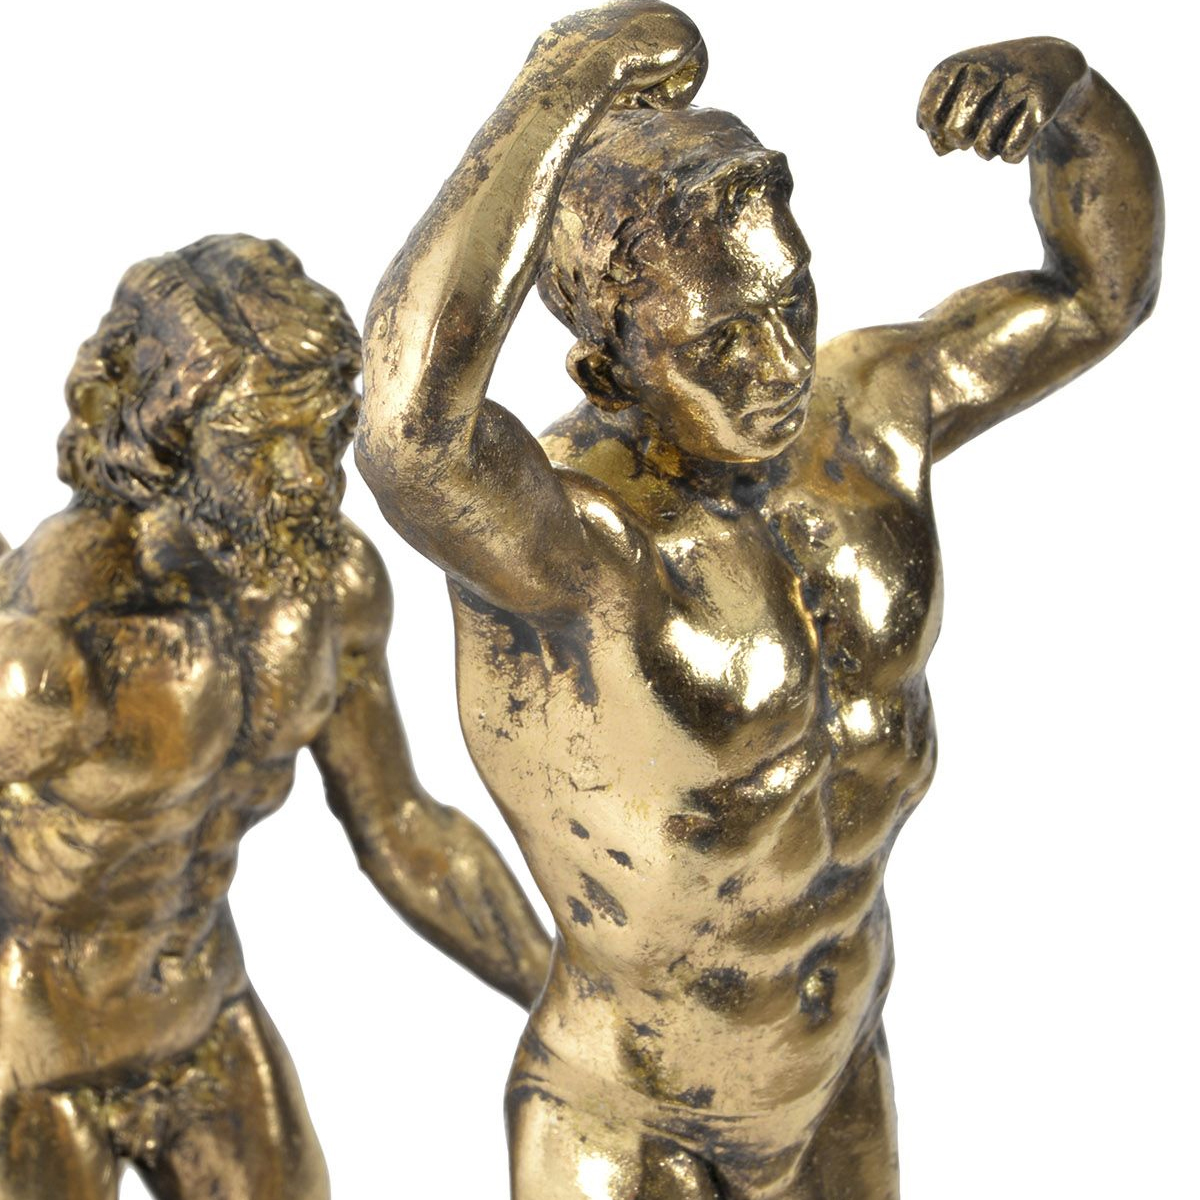 Golden resin figurine - Evolution of man